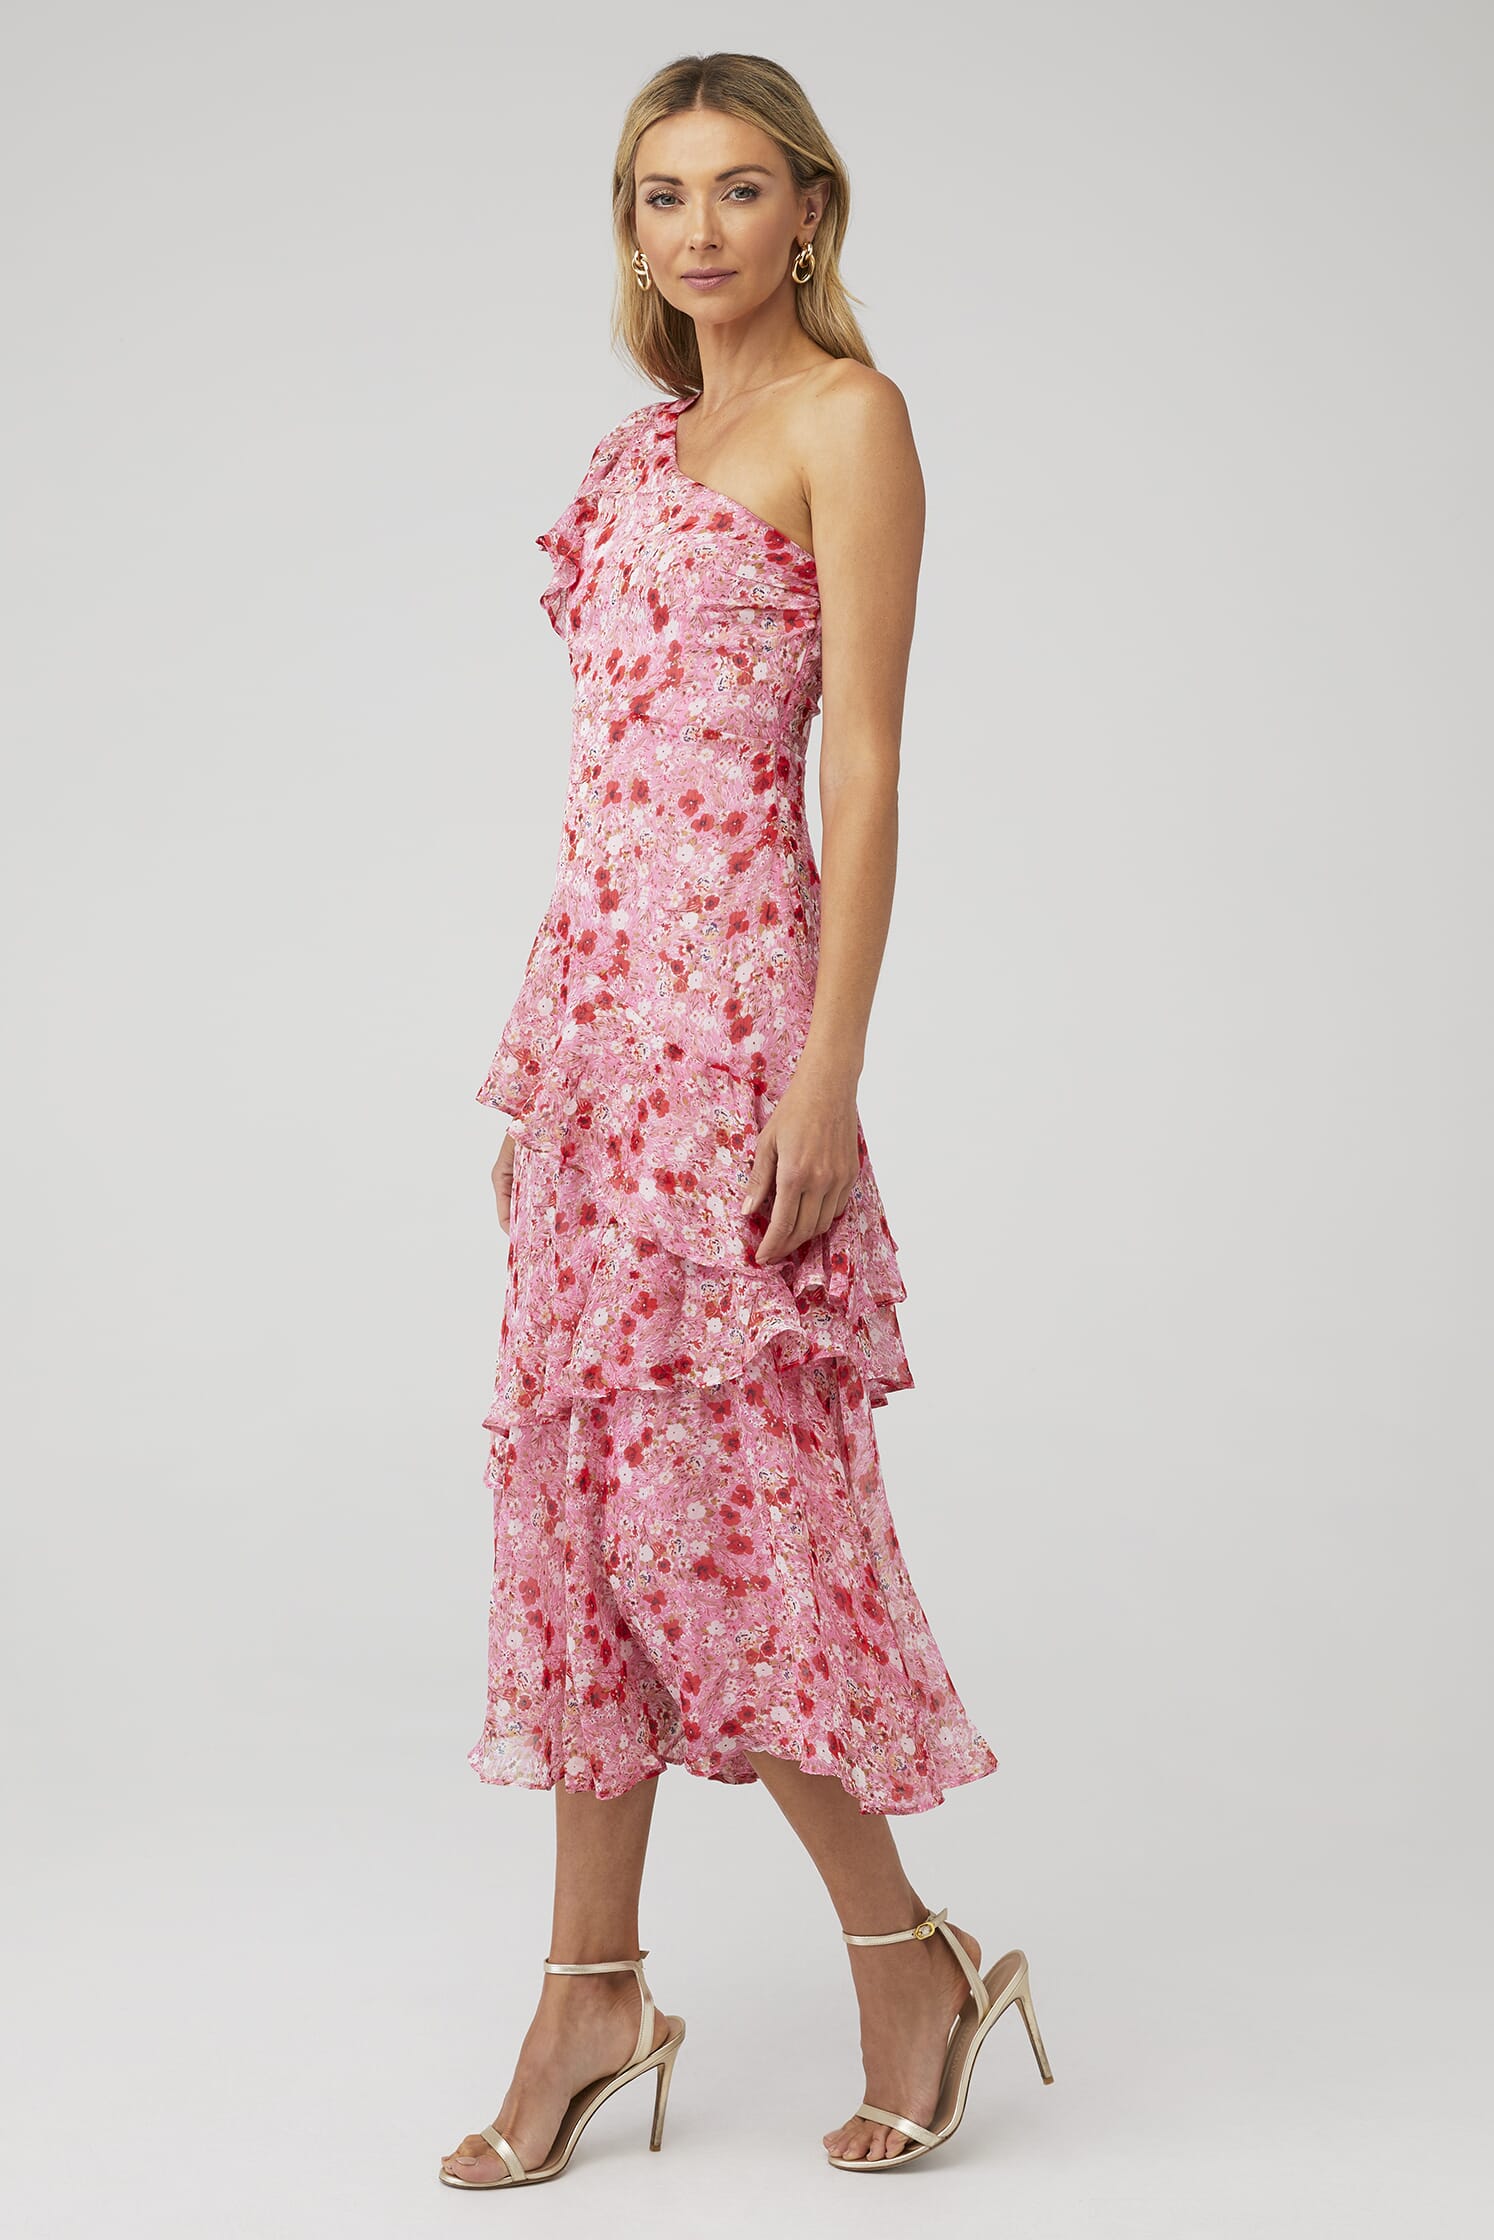 Reagan Pink Floral Strapless Corset Dress